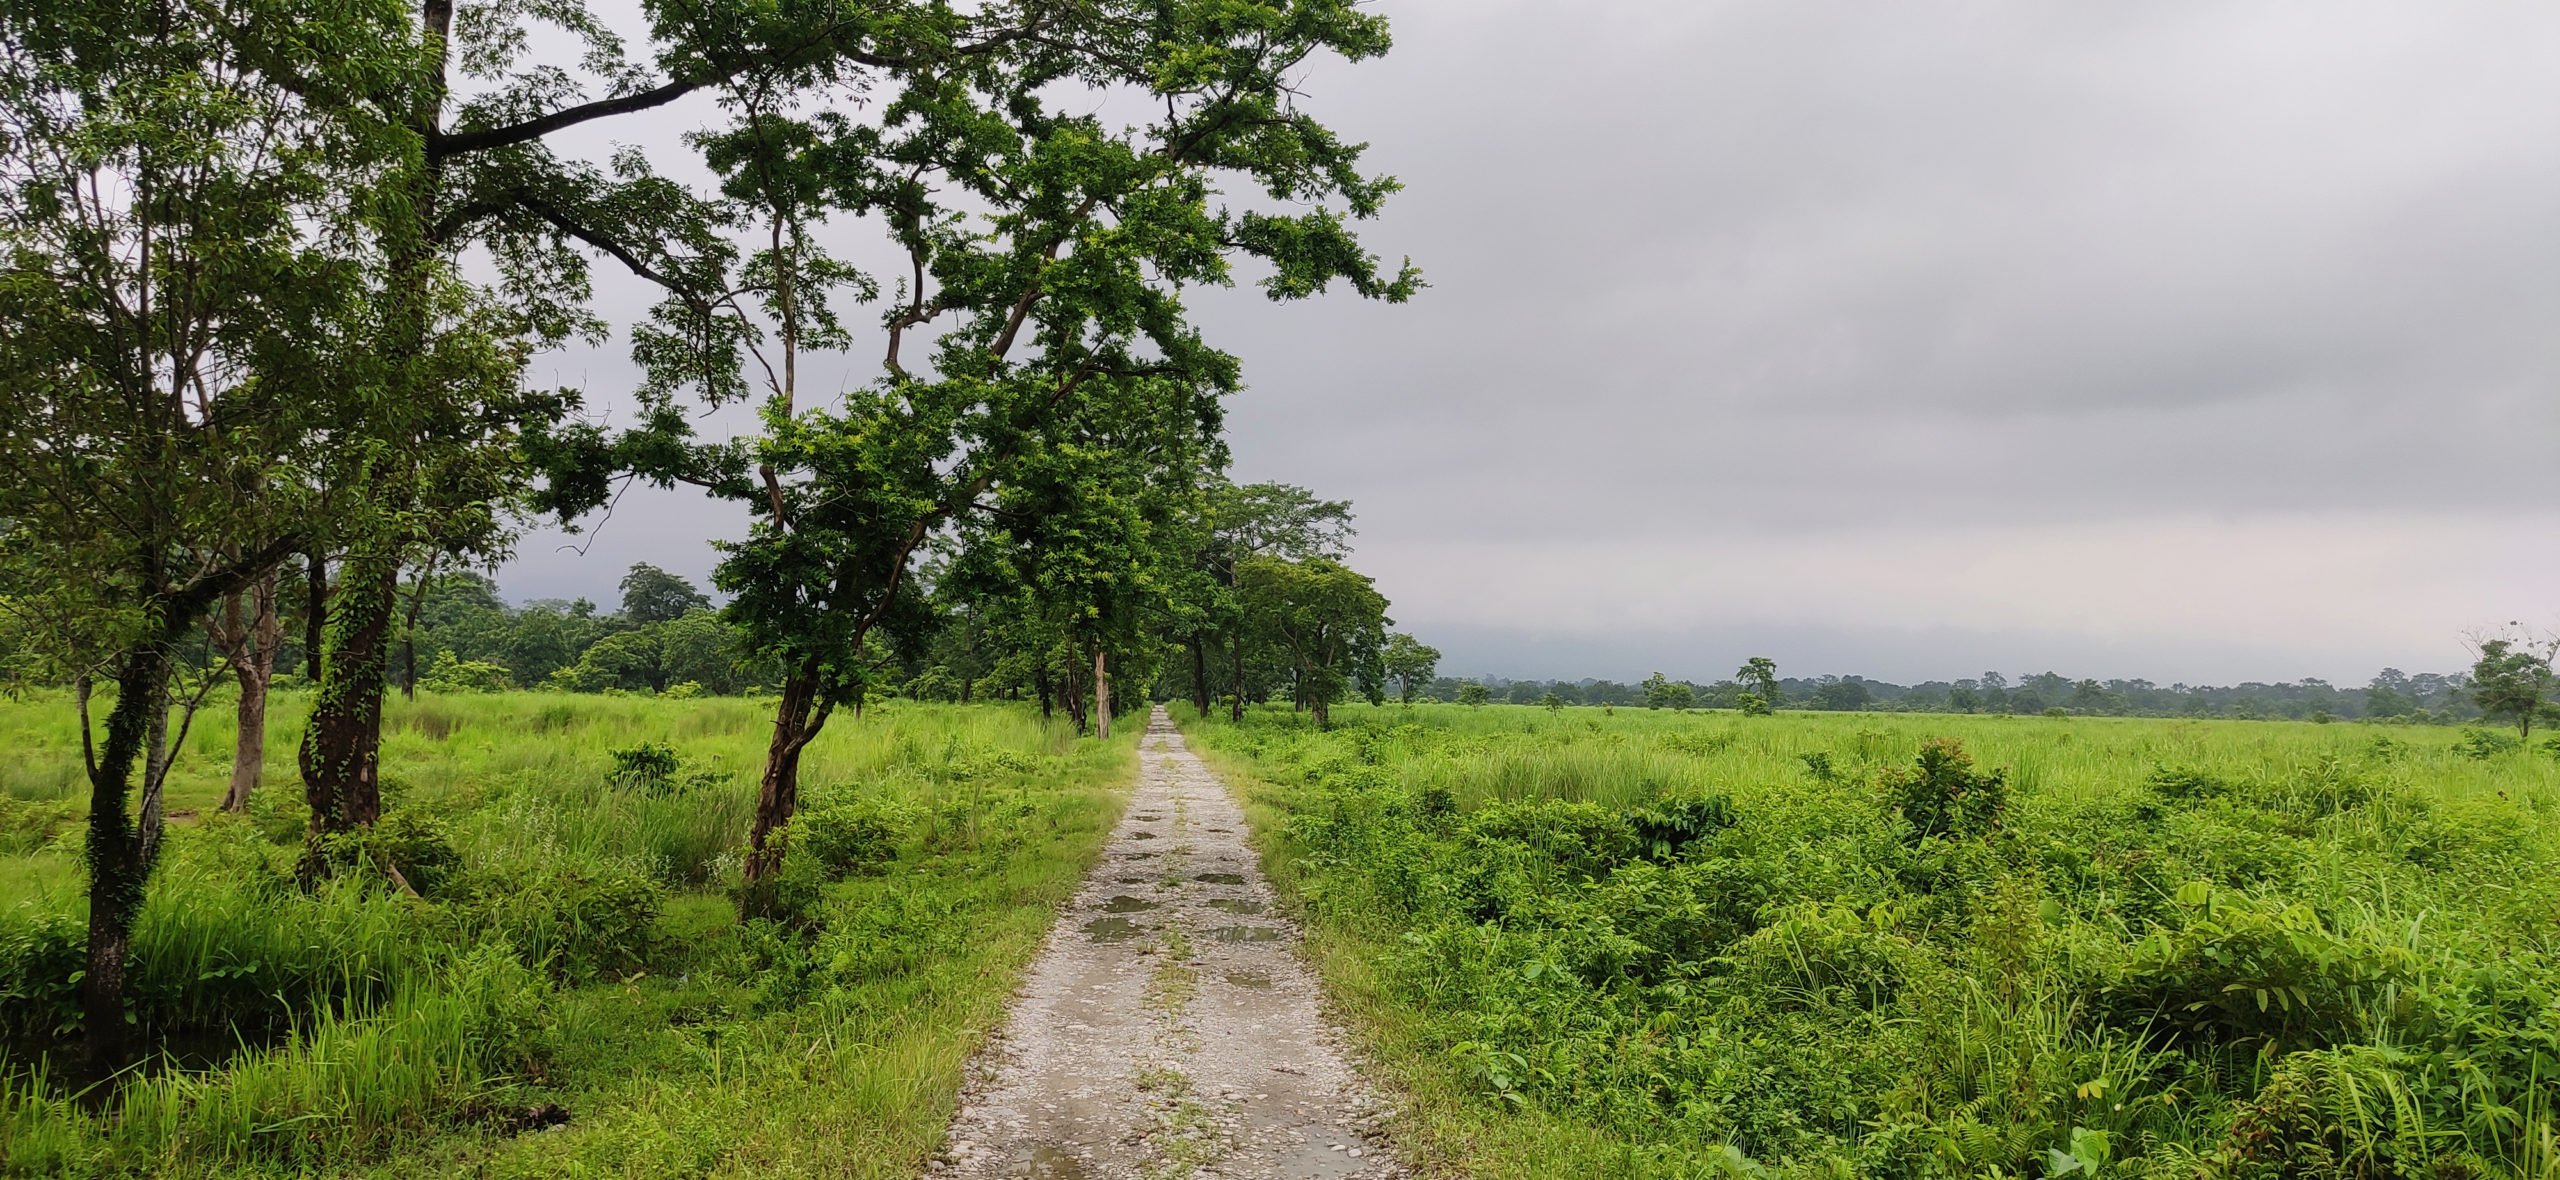 Assam's Manas National Park regains its glory | The Third Pole